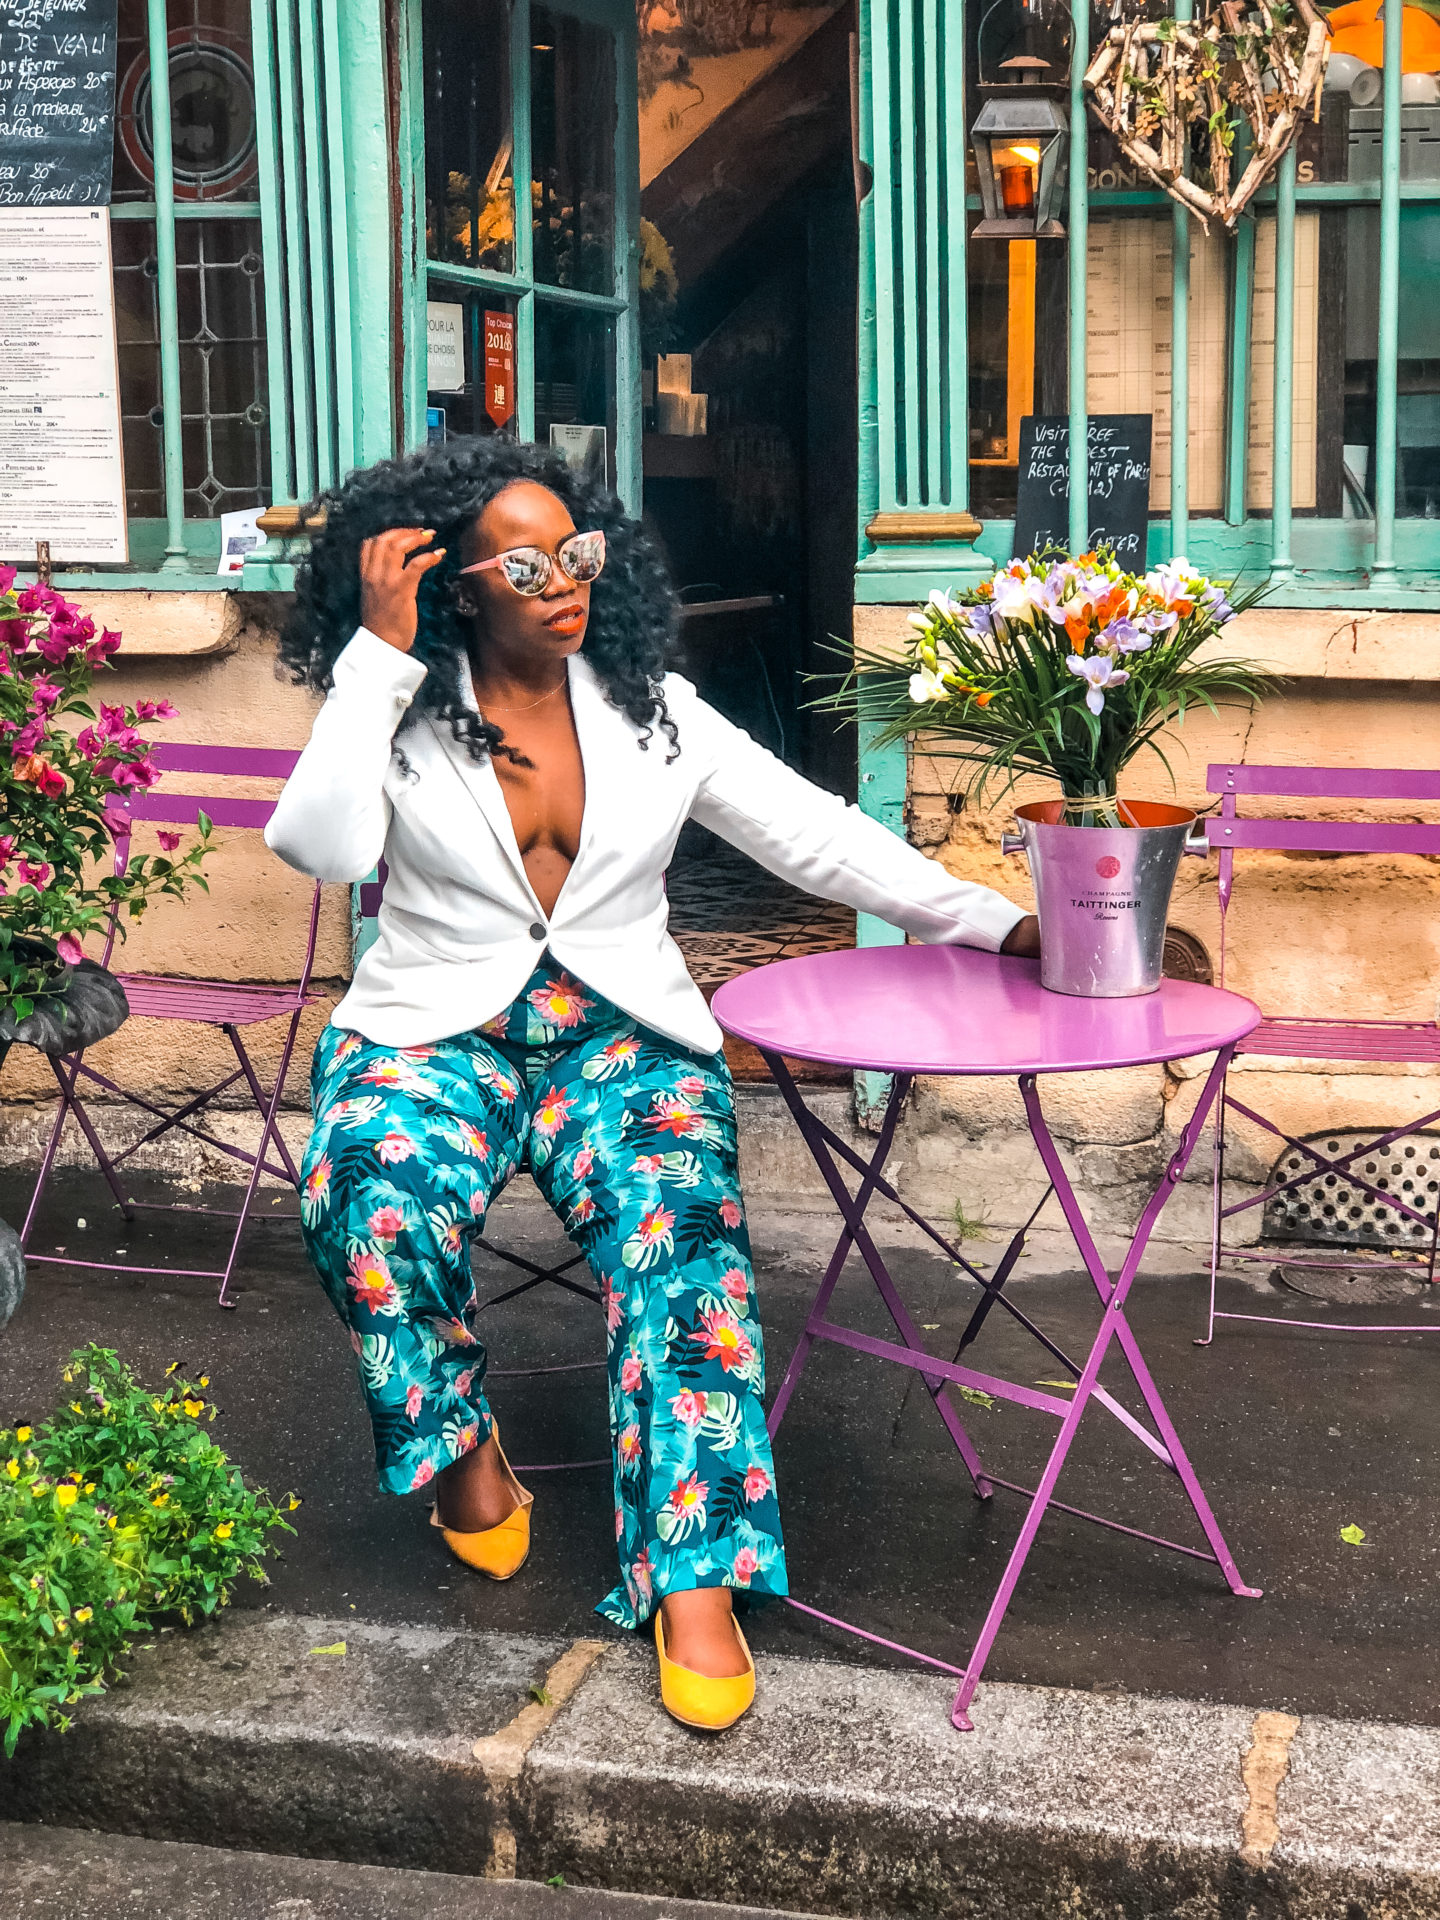 African, African Blogger, Boston Blogger, France, Paris, Africancocktail, African cocktail, Au Vieux D’arcole, Cafe, Paris Instagrammable Spots, Instagram